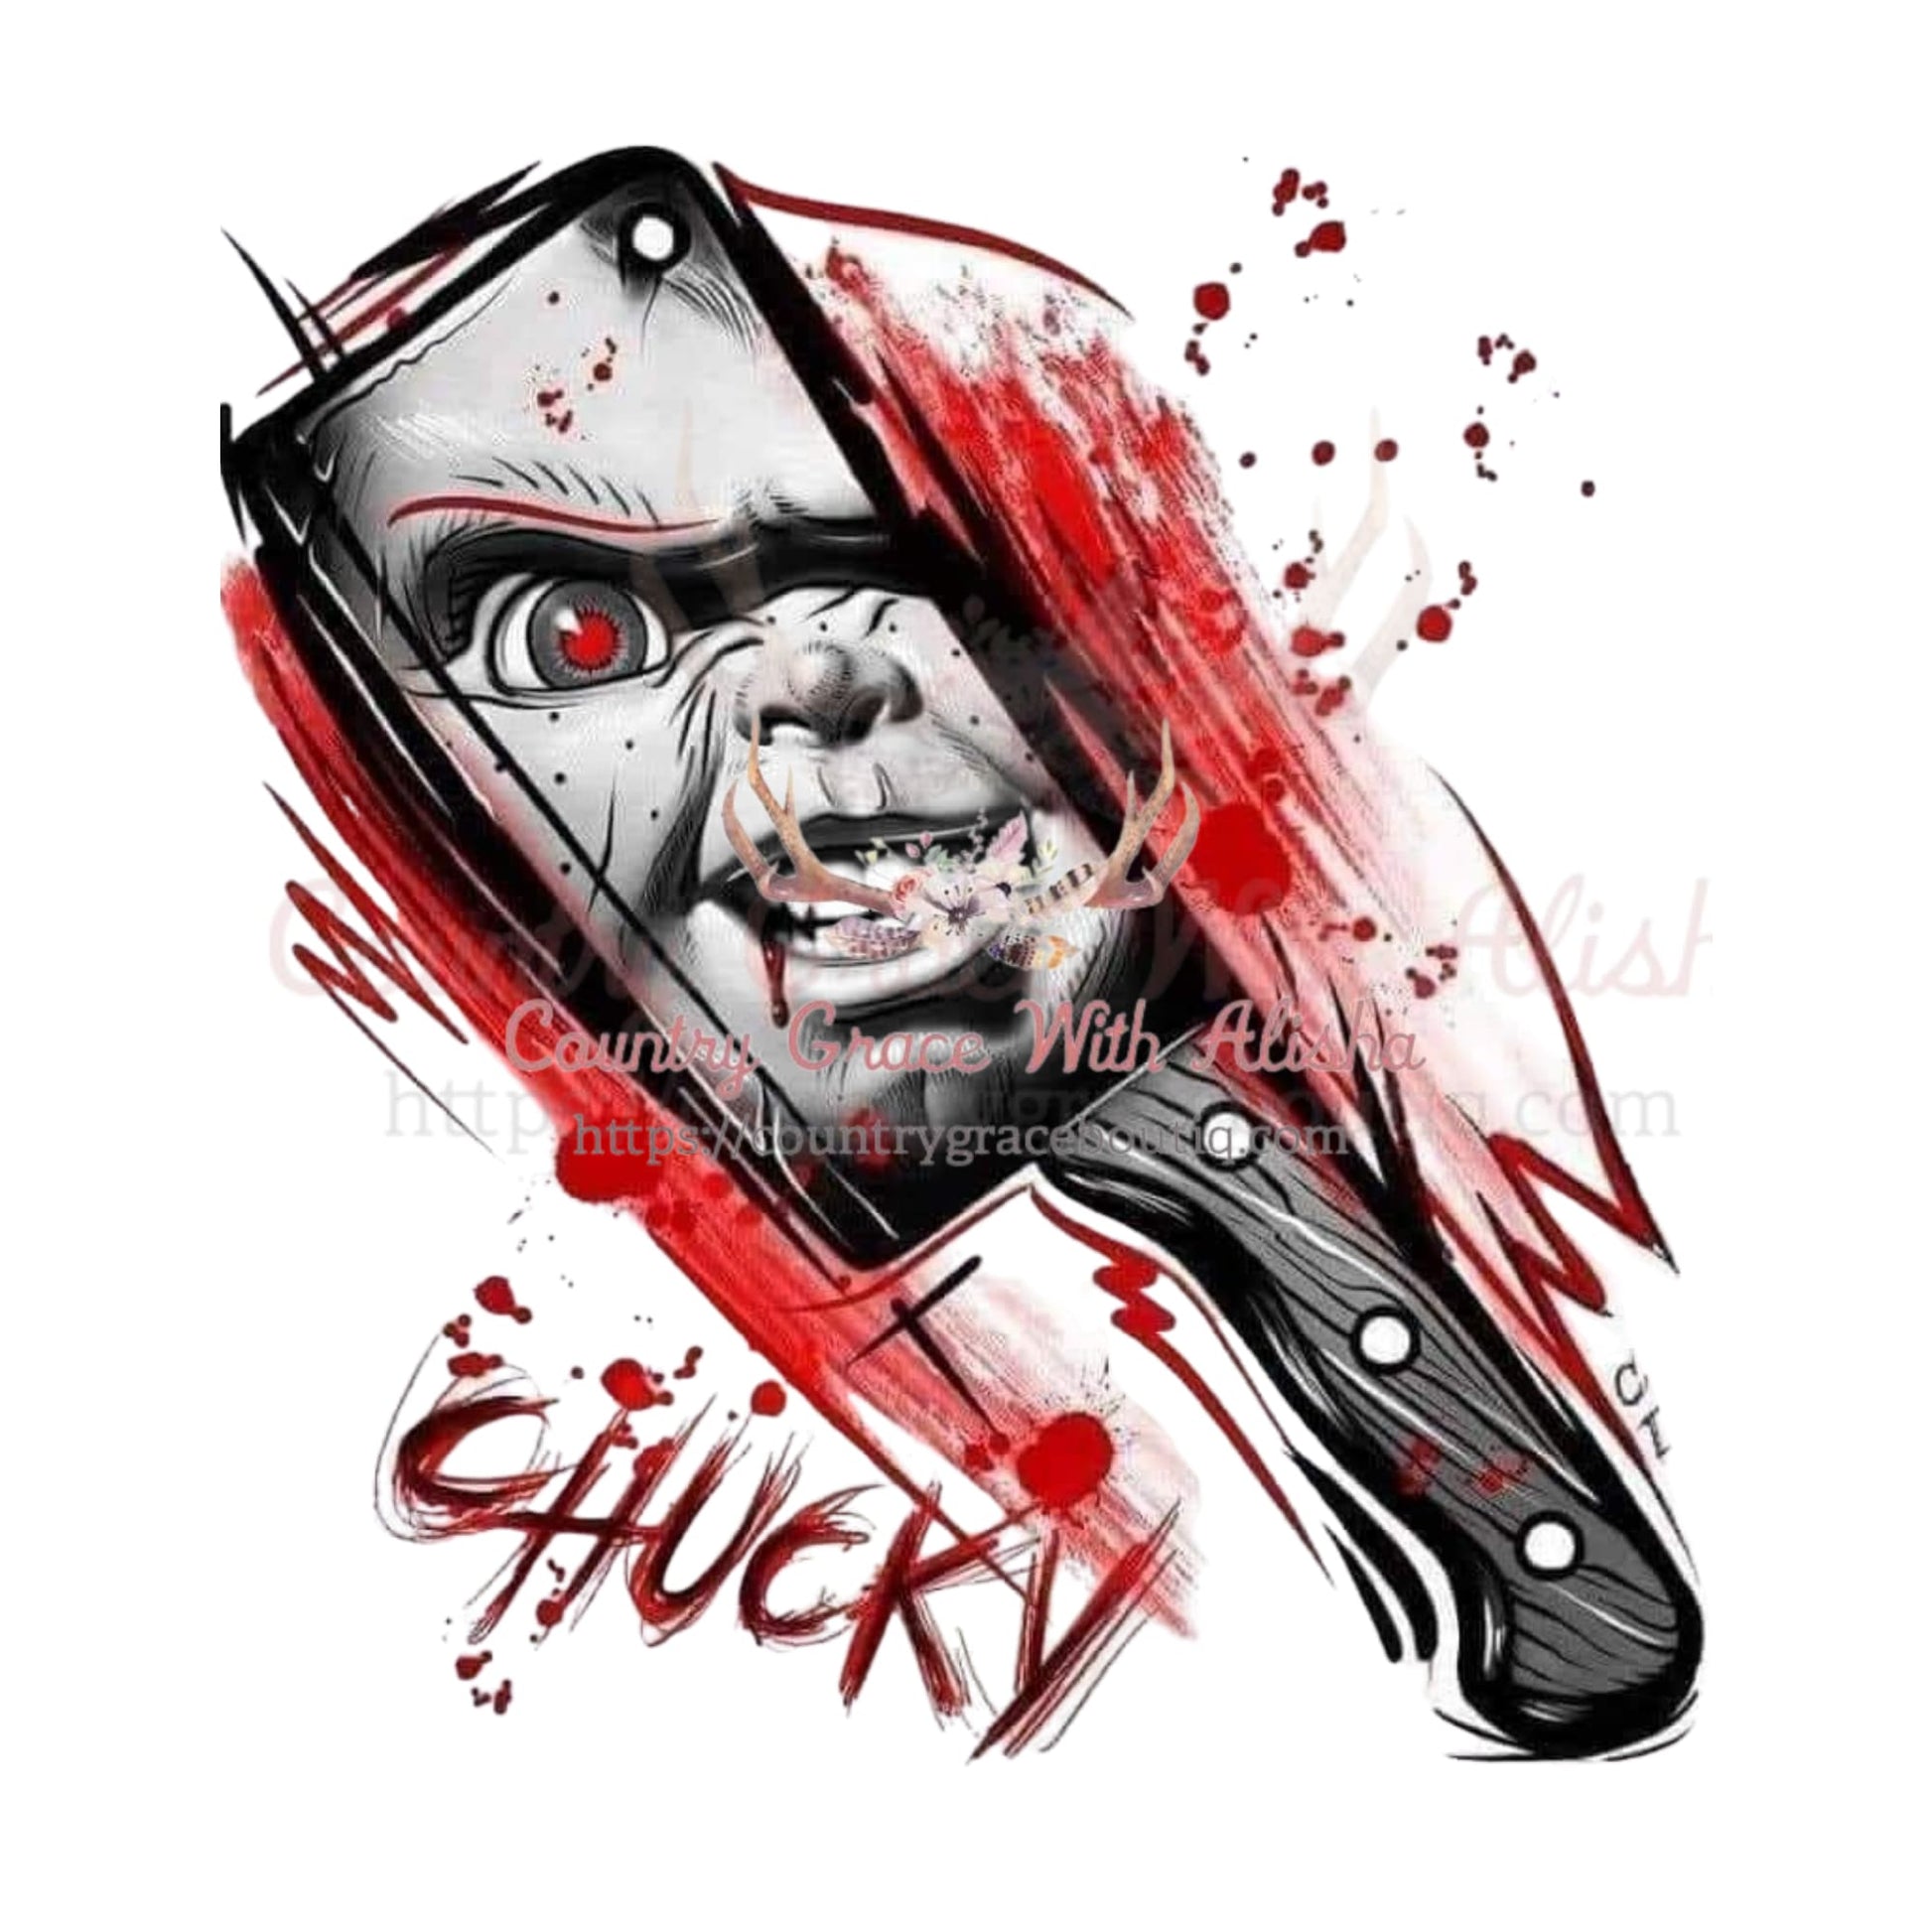 Chucky Knife Sublimation Transfer - Sub $1.50 Country Grace 